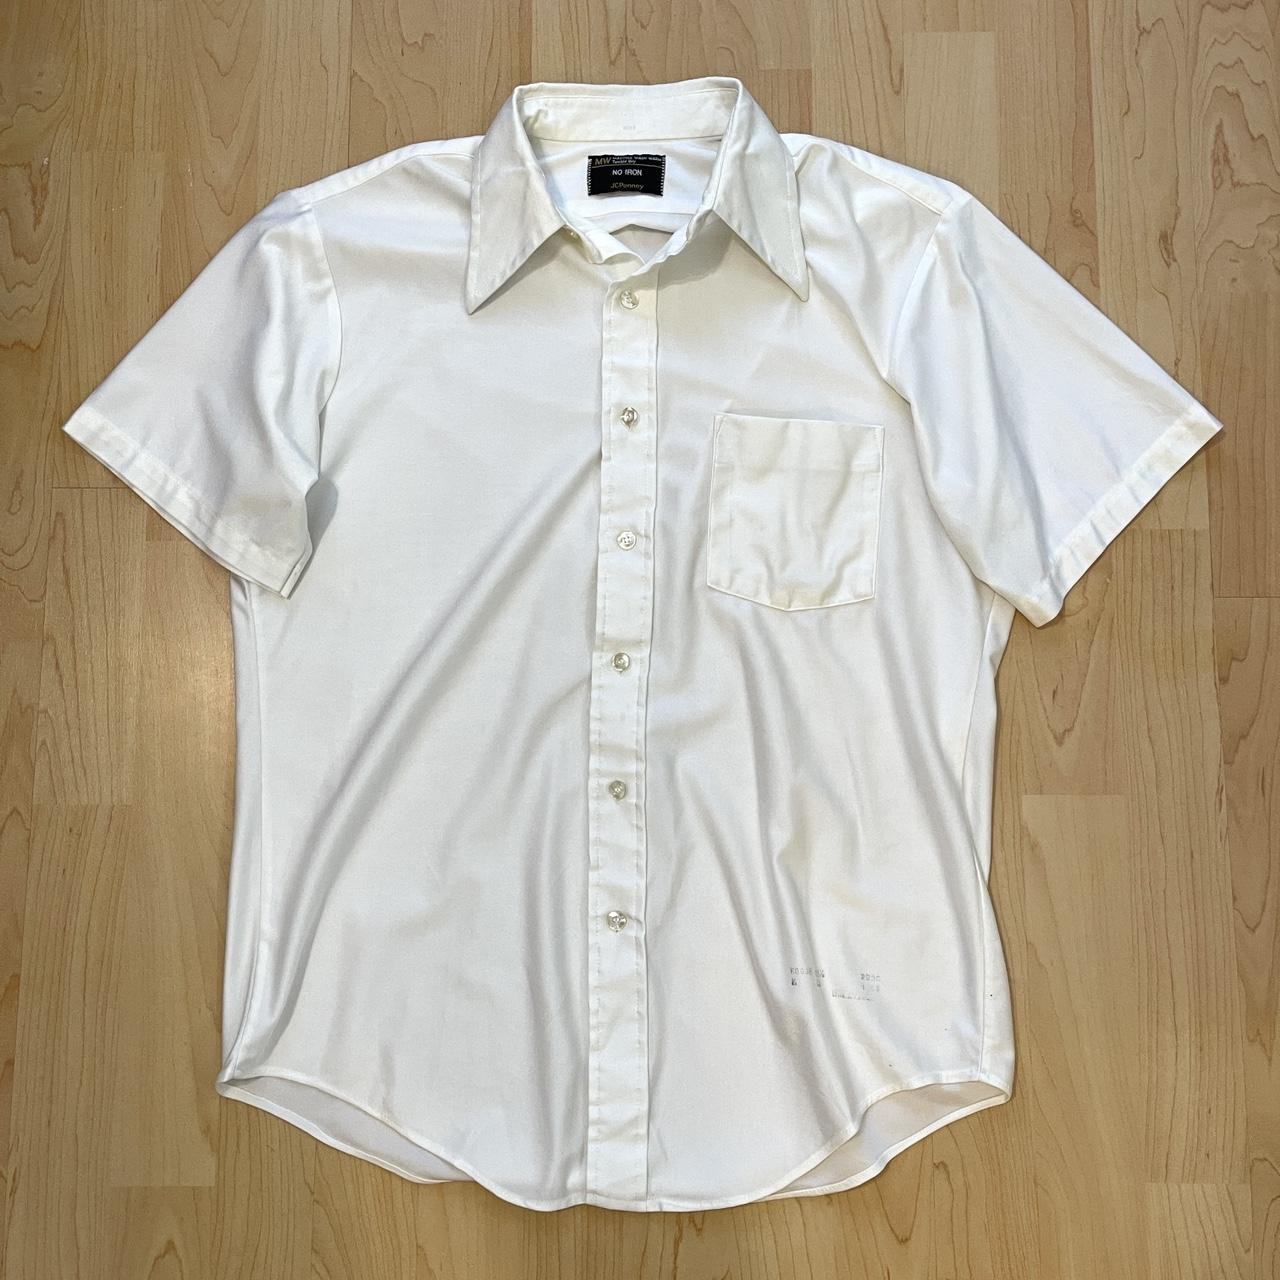 JCPenney Women's Cream and White Shirt | Depop